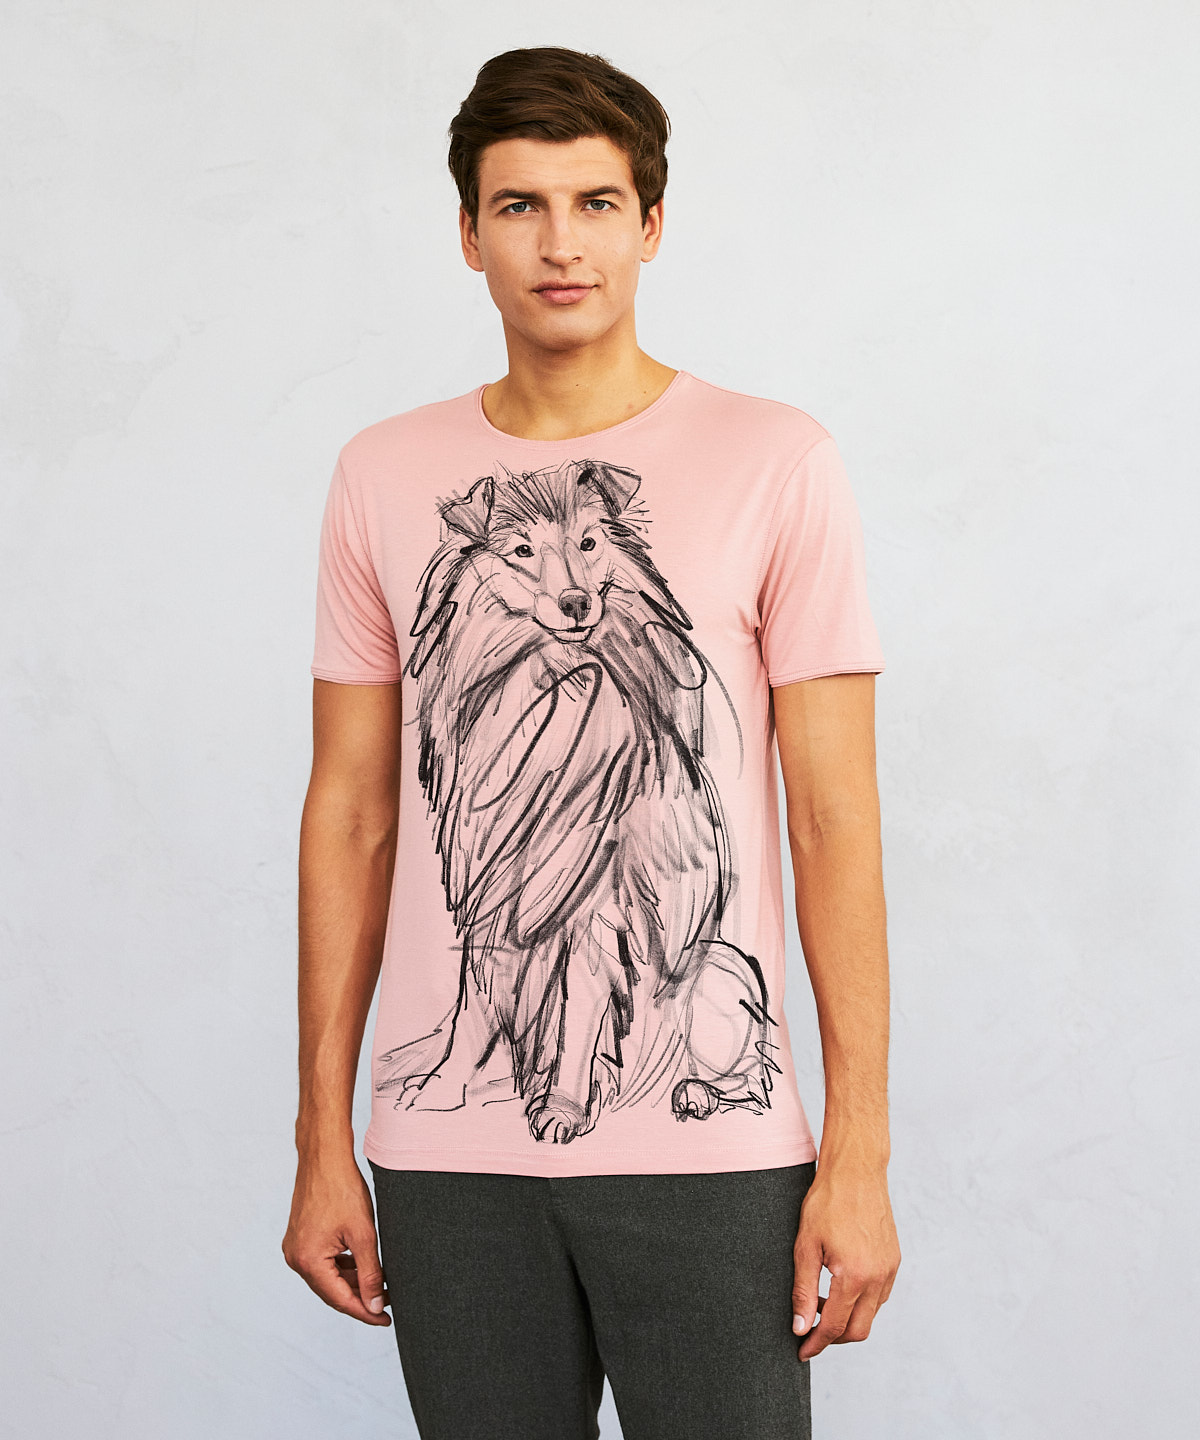 Shetland Sheepdog light pink t-shirt MAN